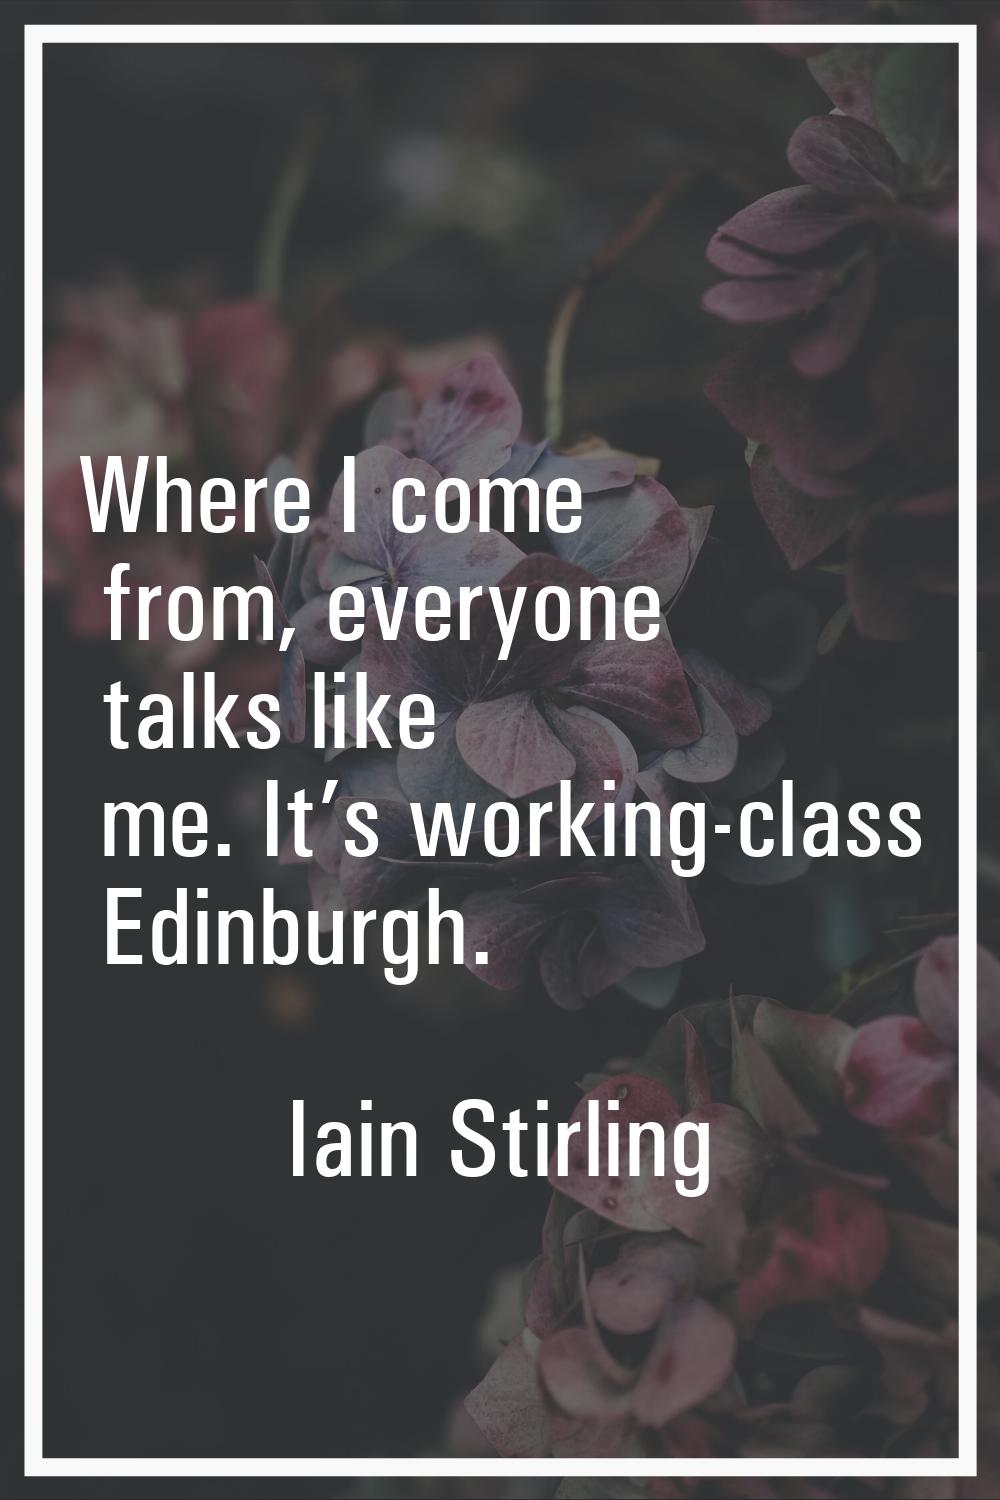 Where I come from, everyone talks like me. It’s working-class Edinburgh.